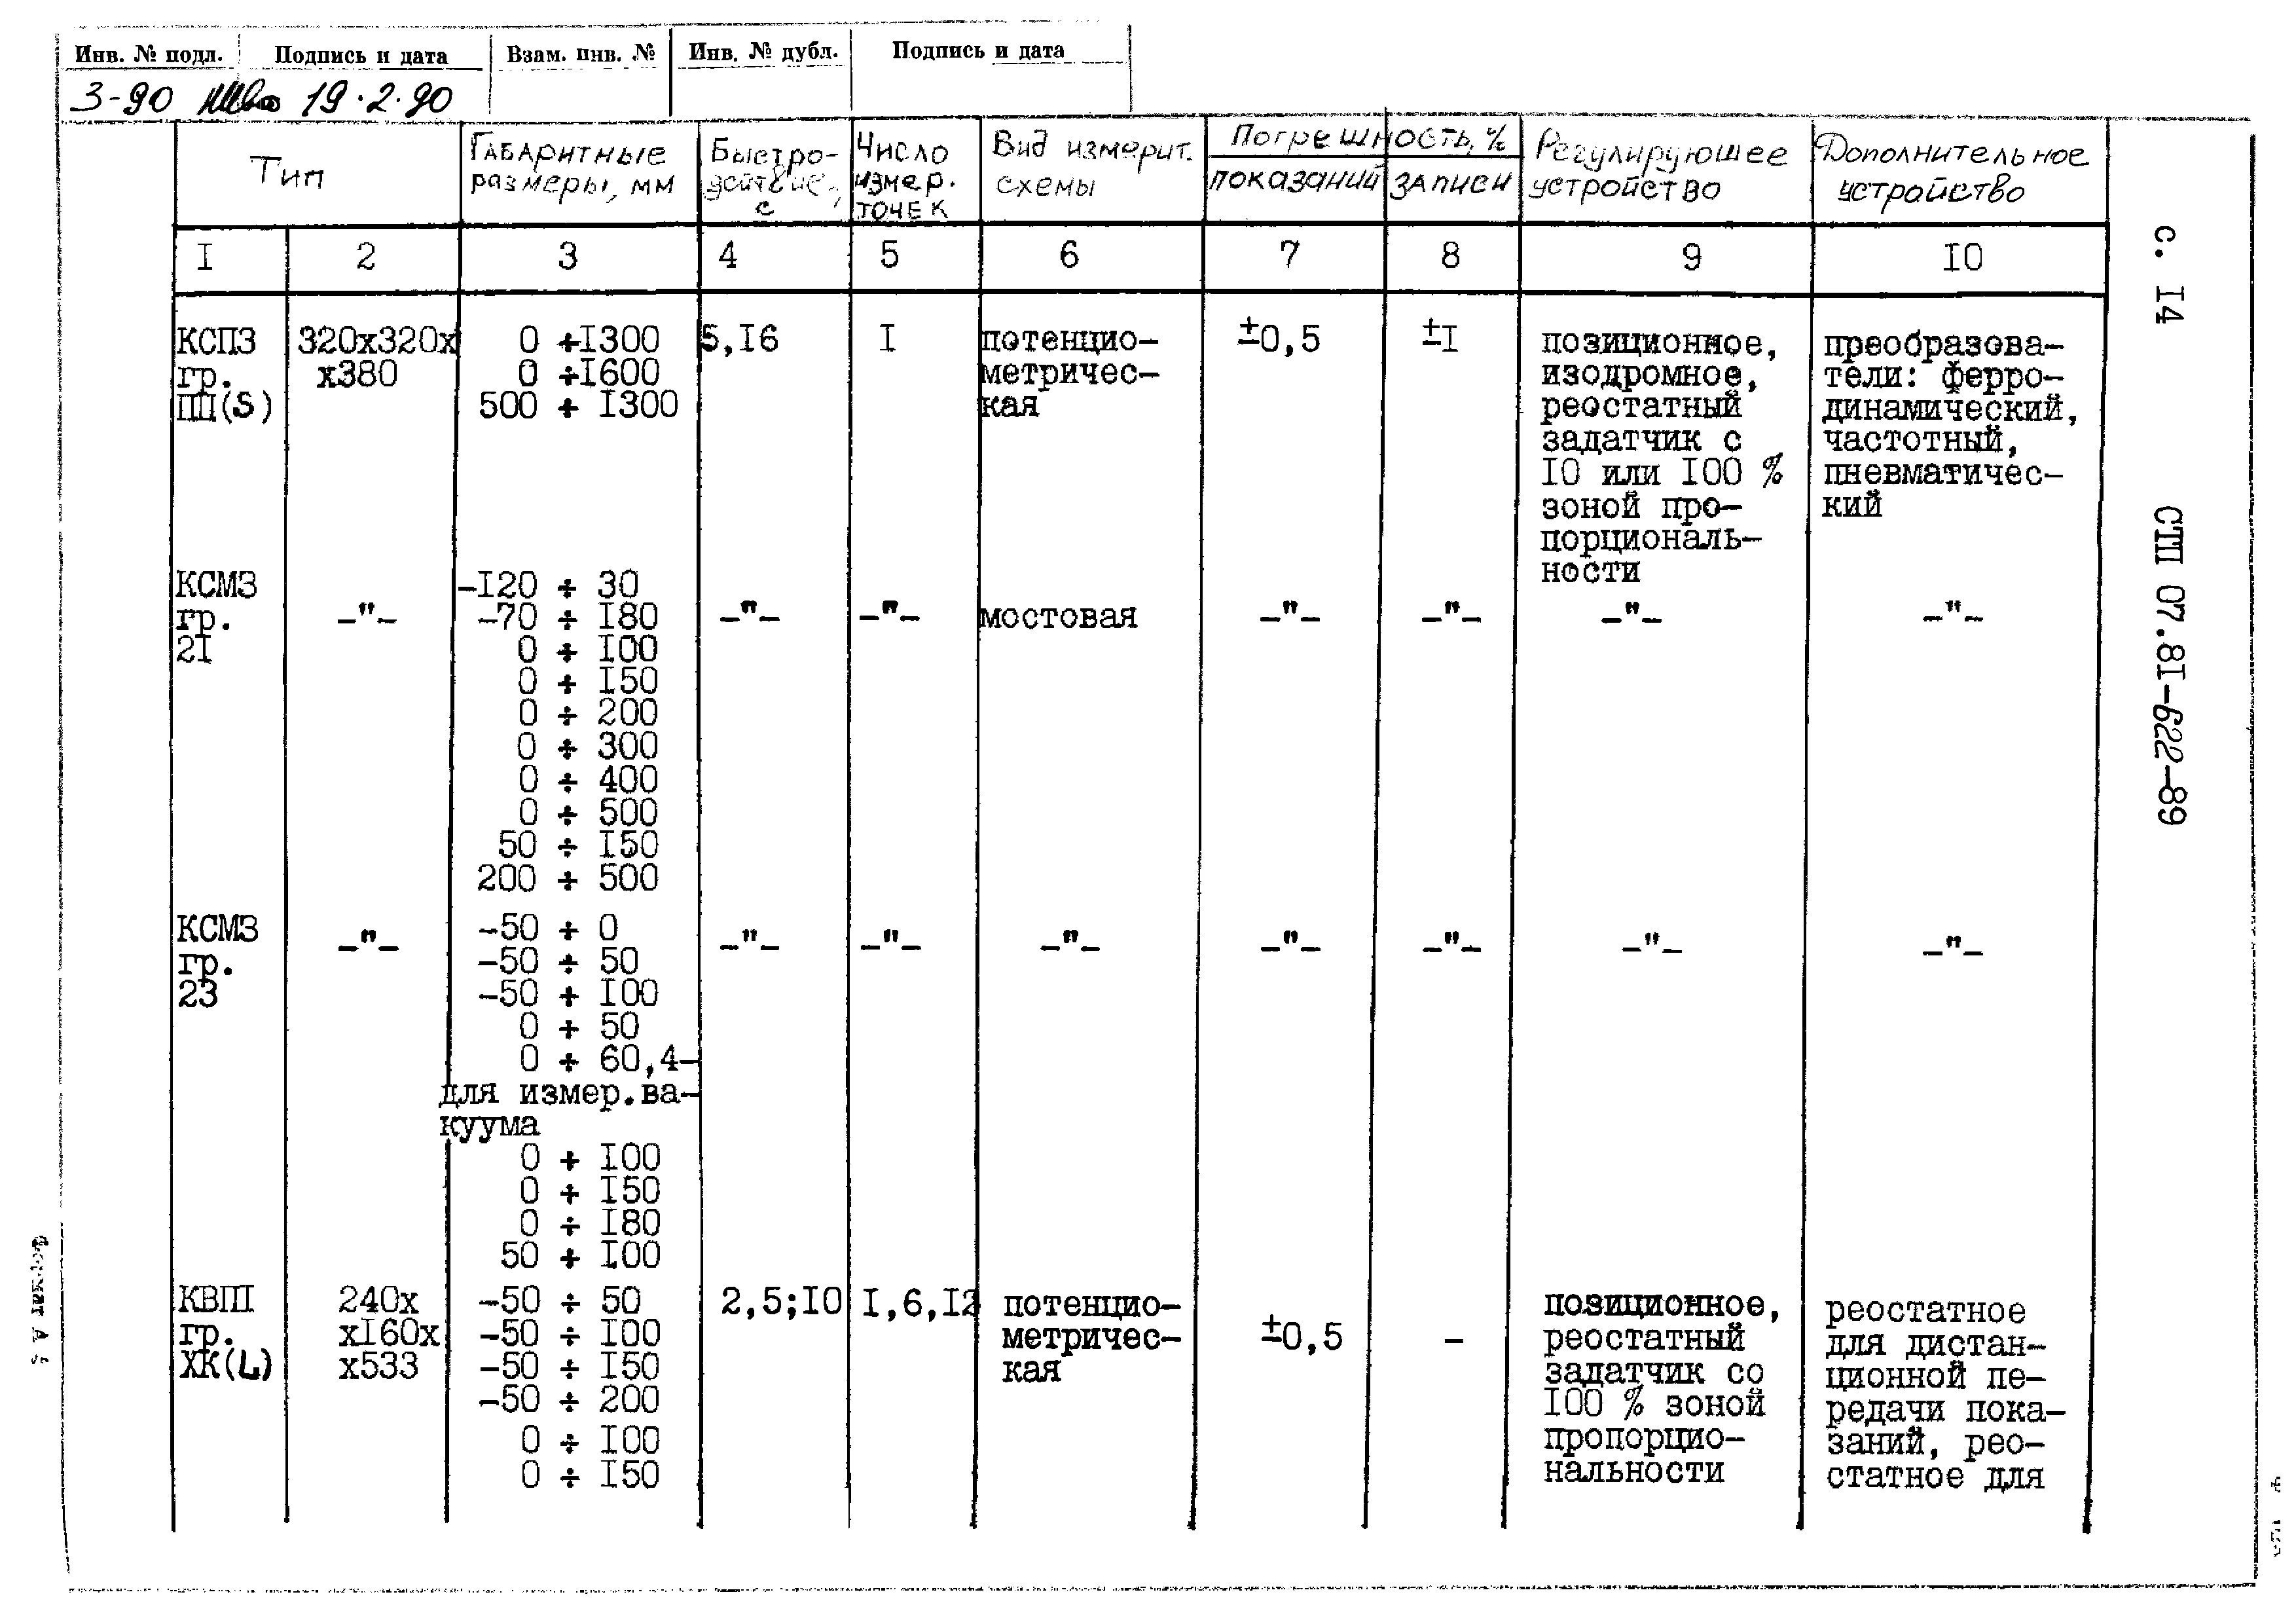 СТП 07.81-622-89